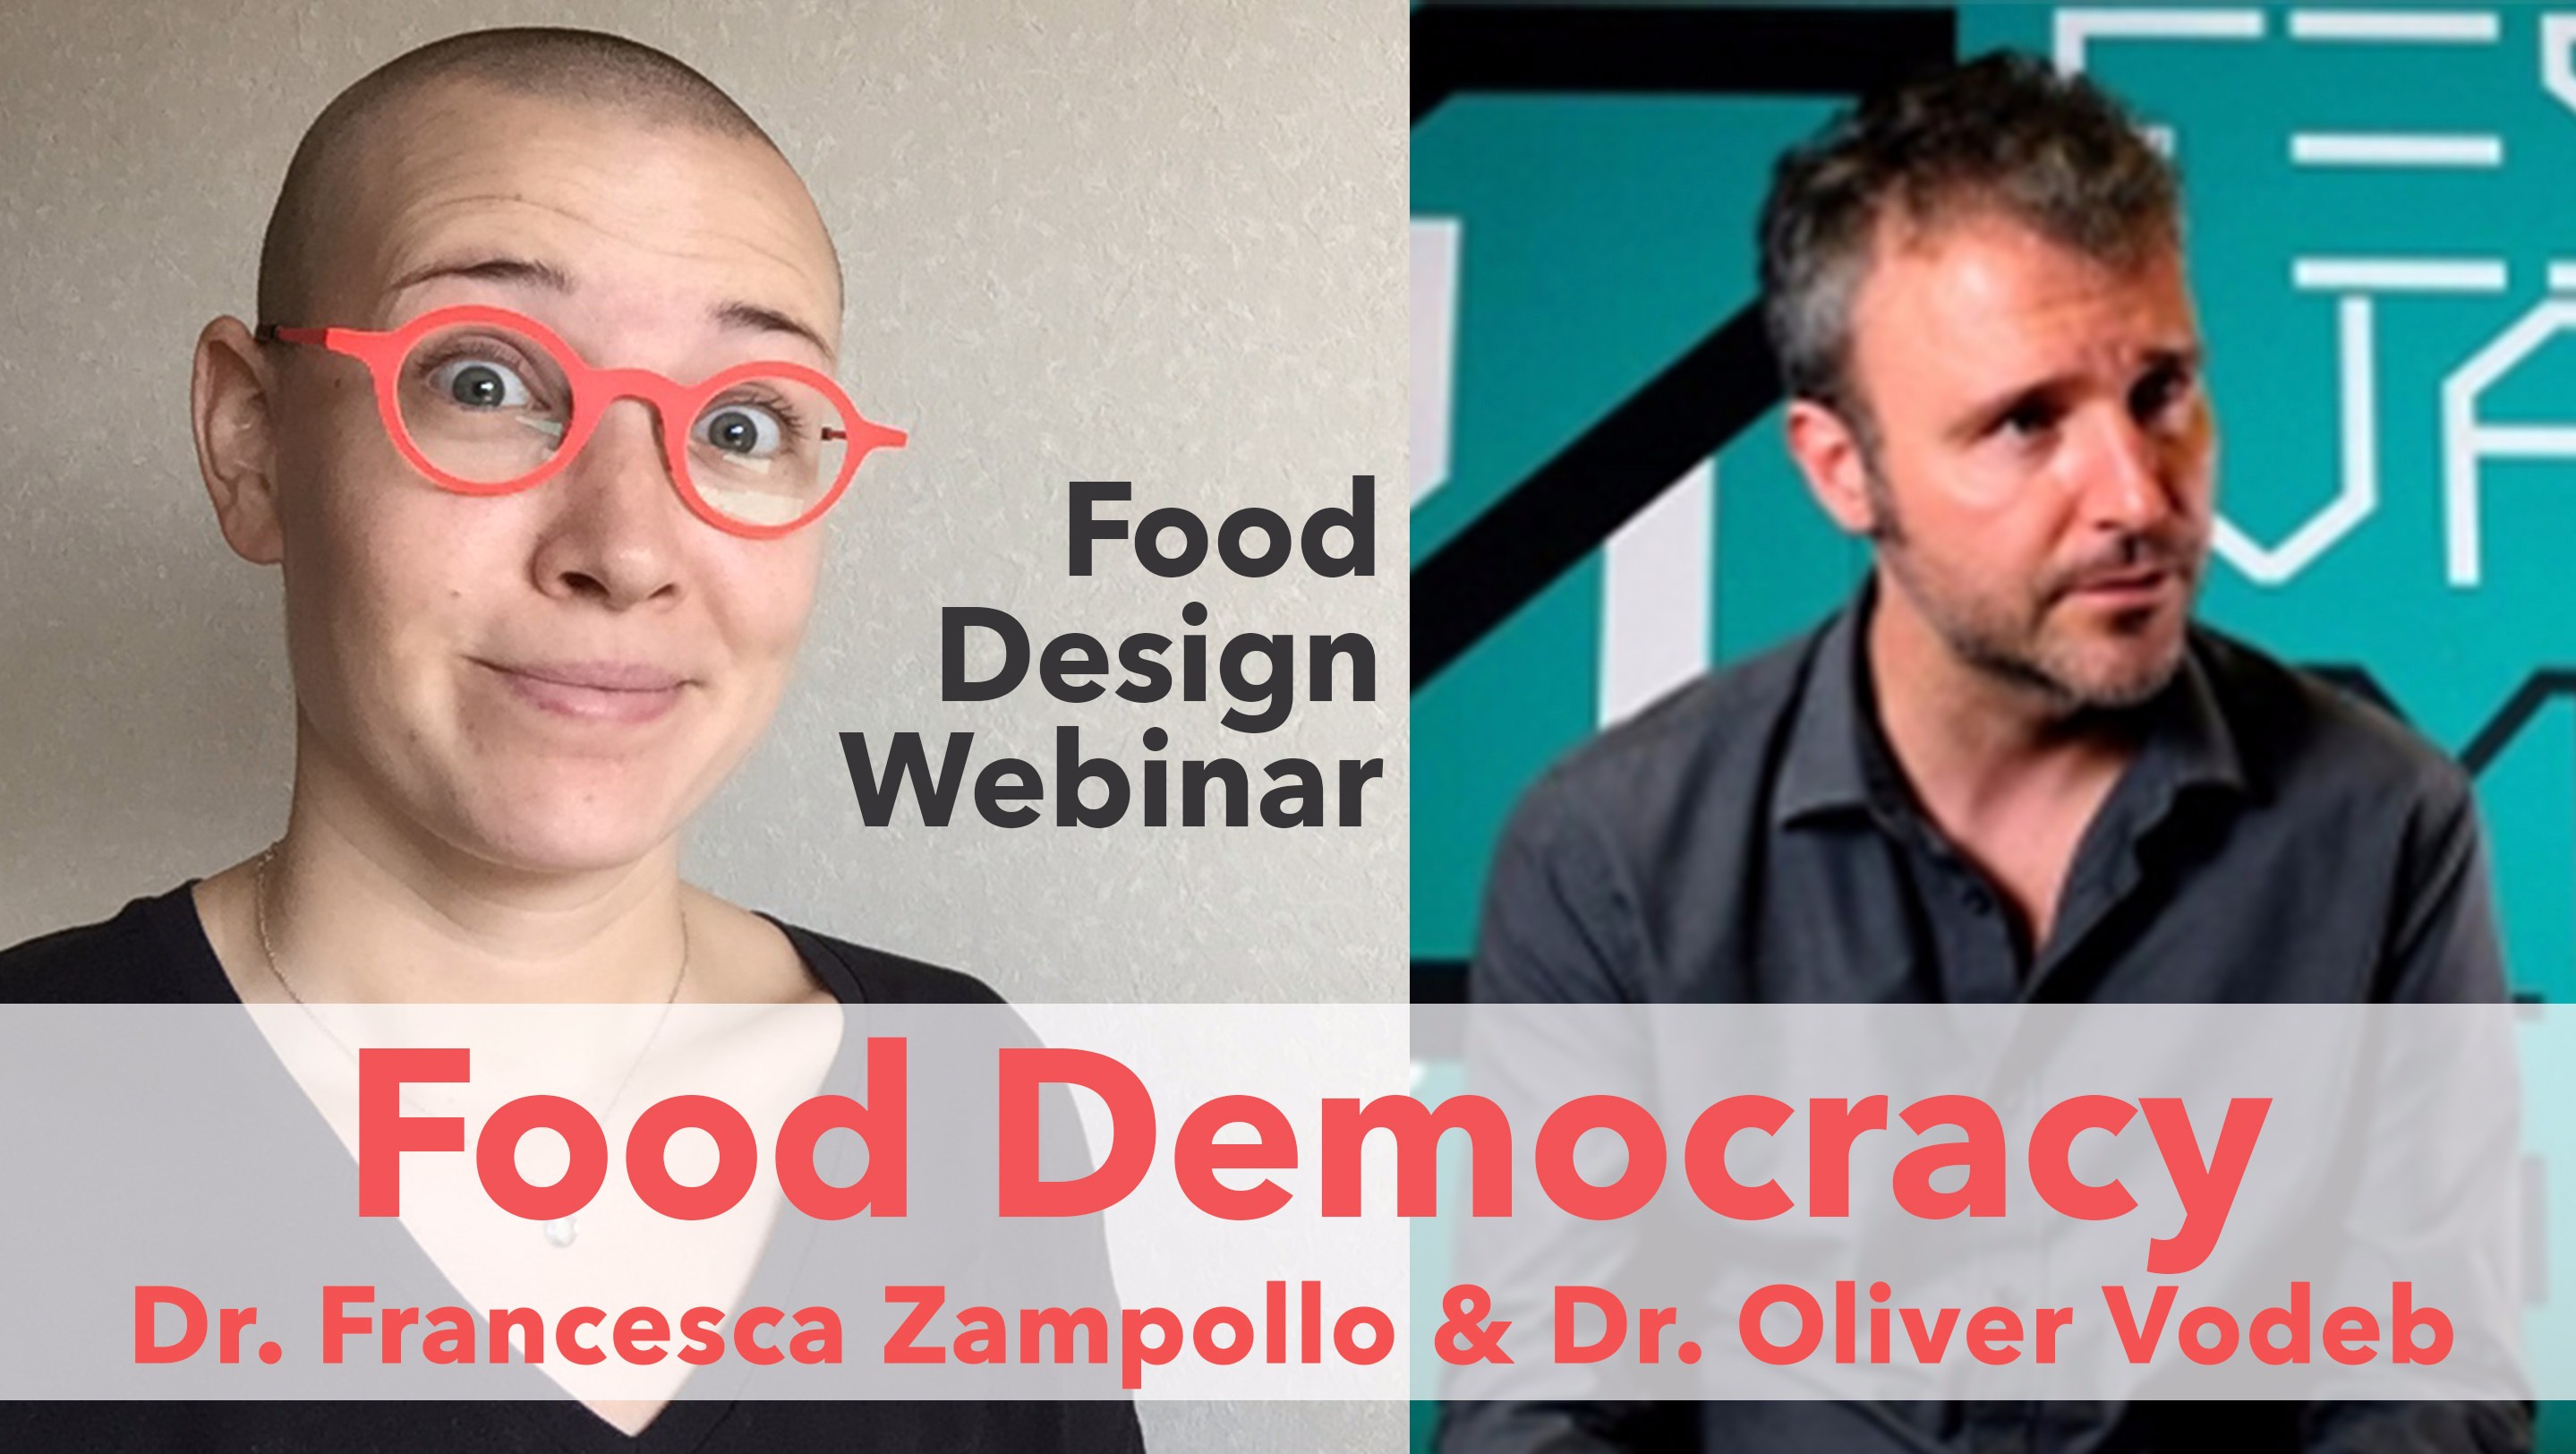 Food Democracy Webinar!